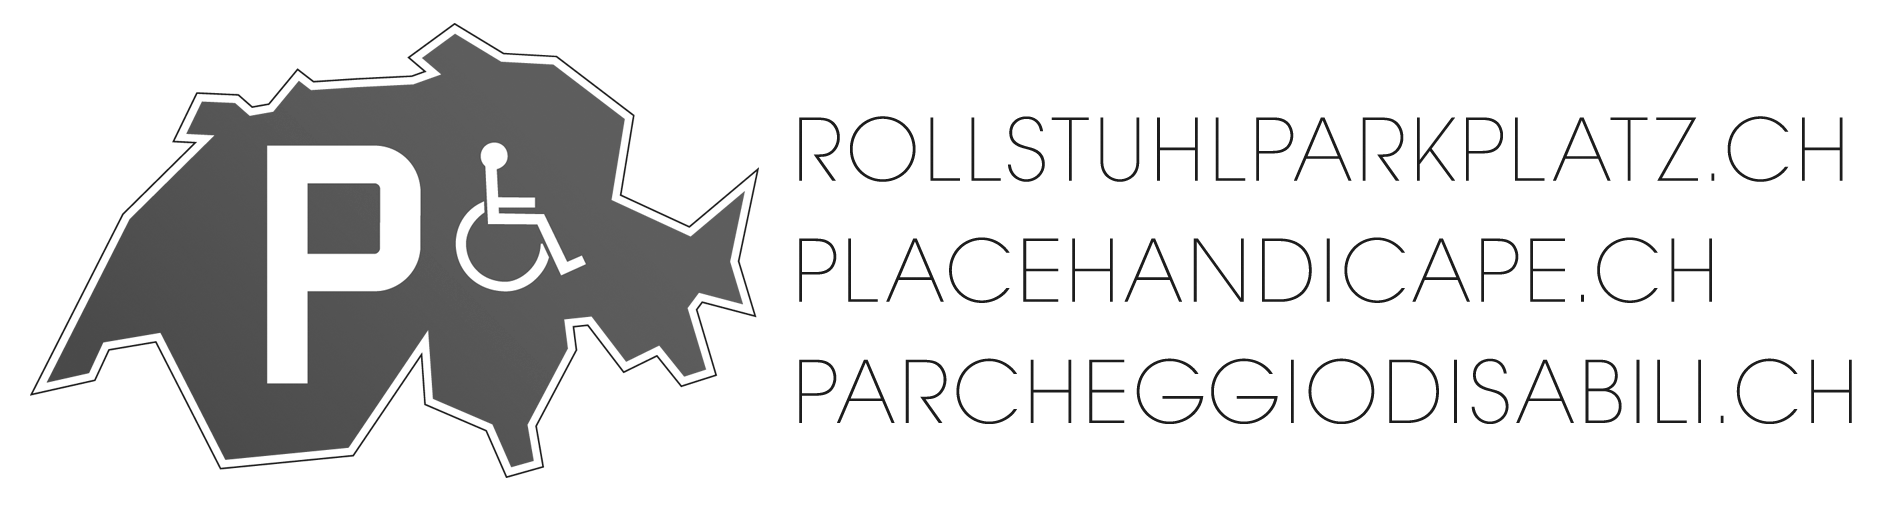 rollstuhlparkplatz.ch